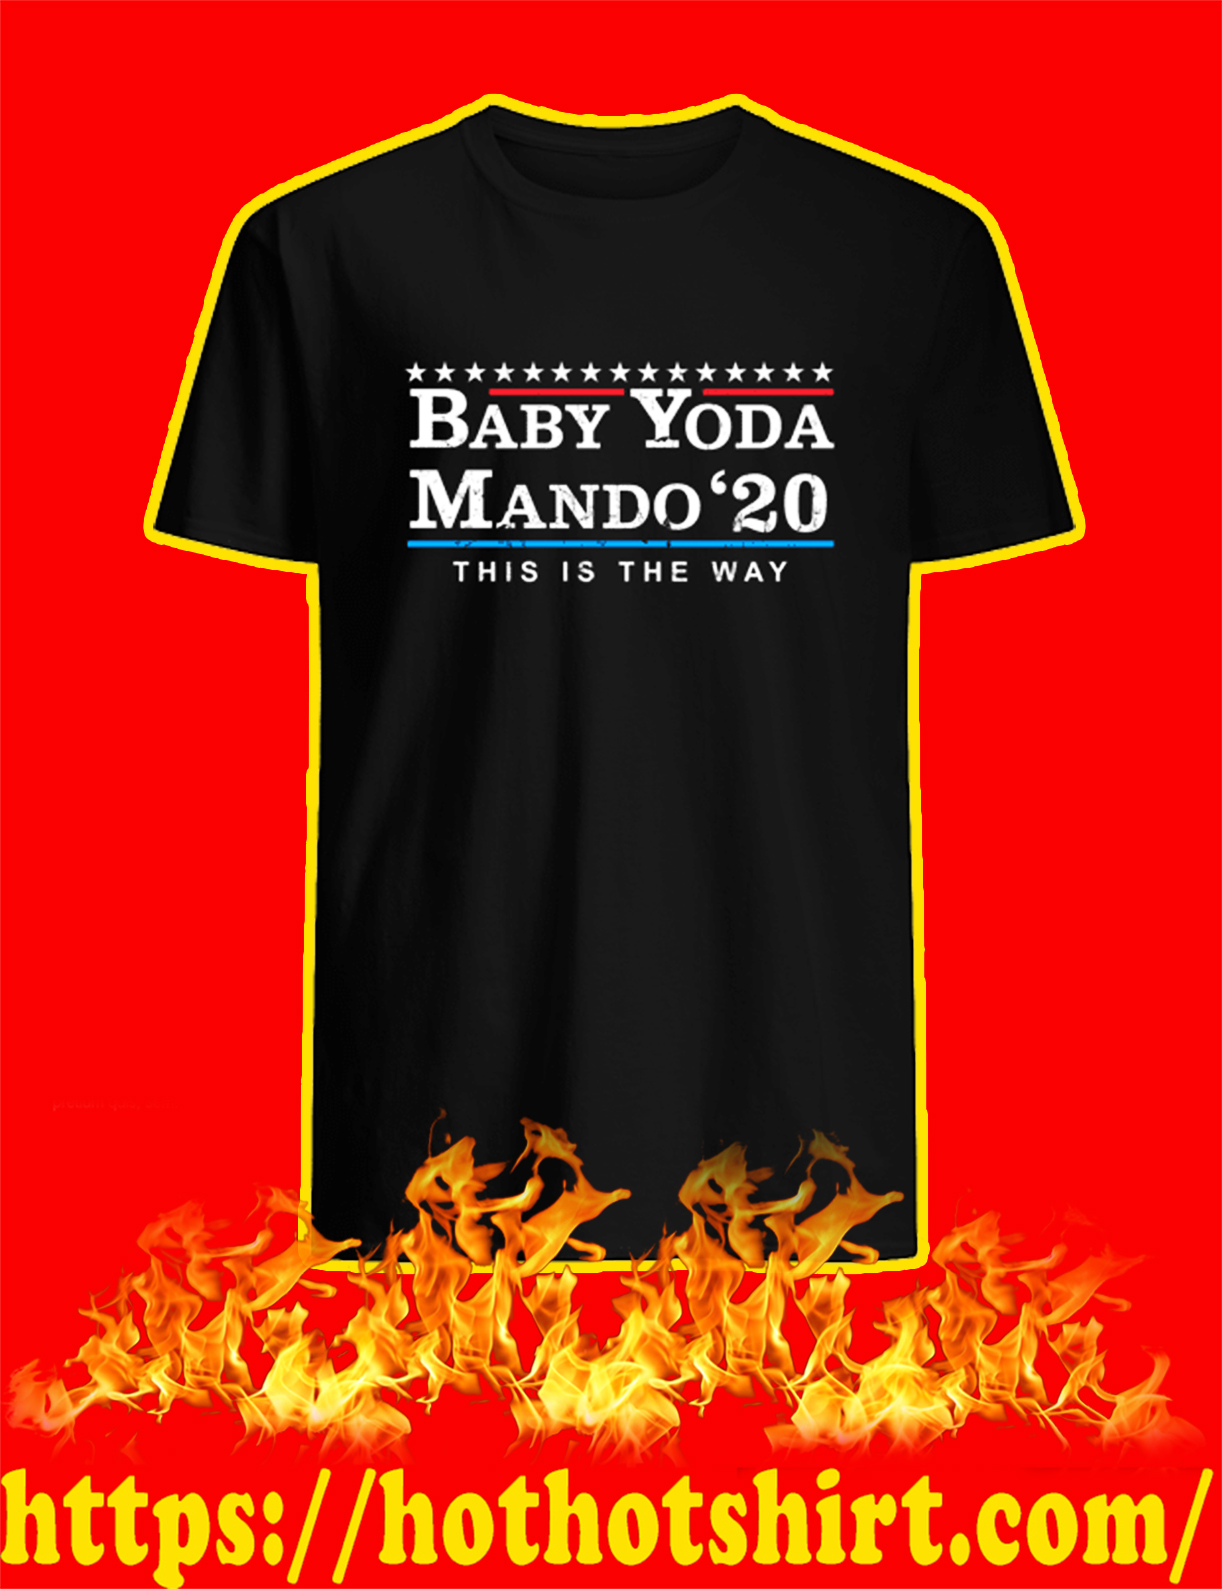 Baby Yoda Mando 20 This Is The Way shirt, hoodie, v-neck